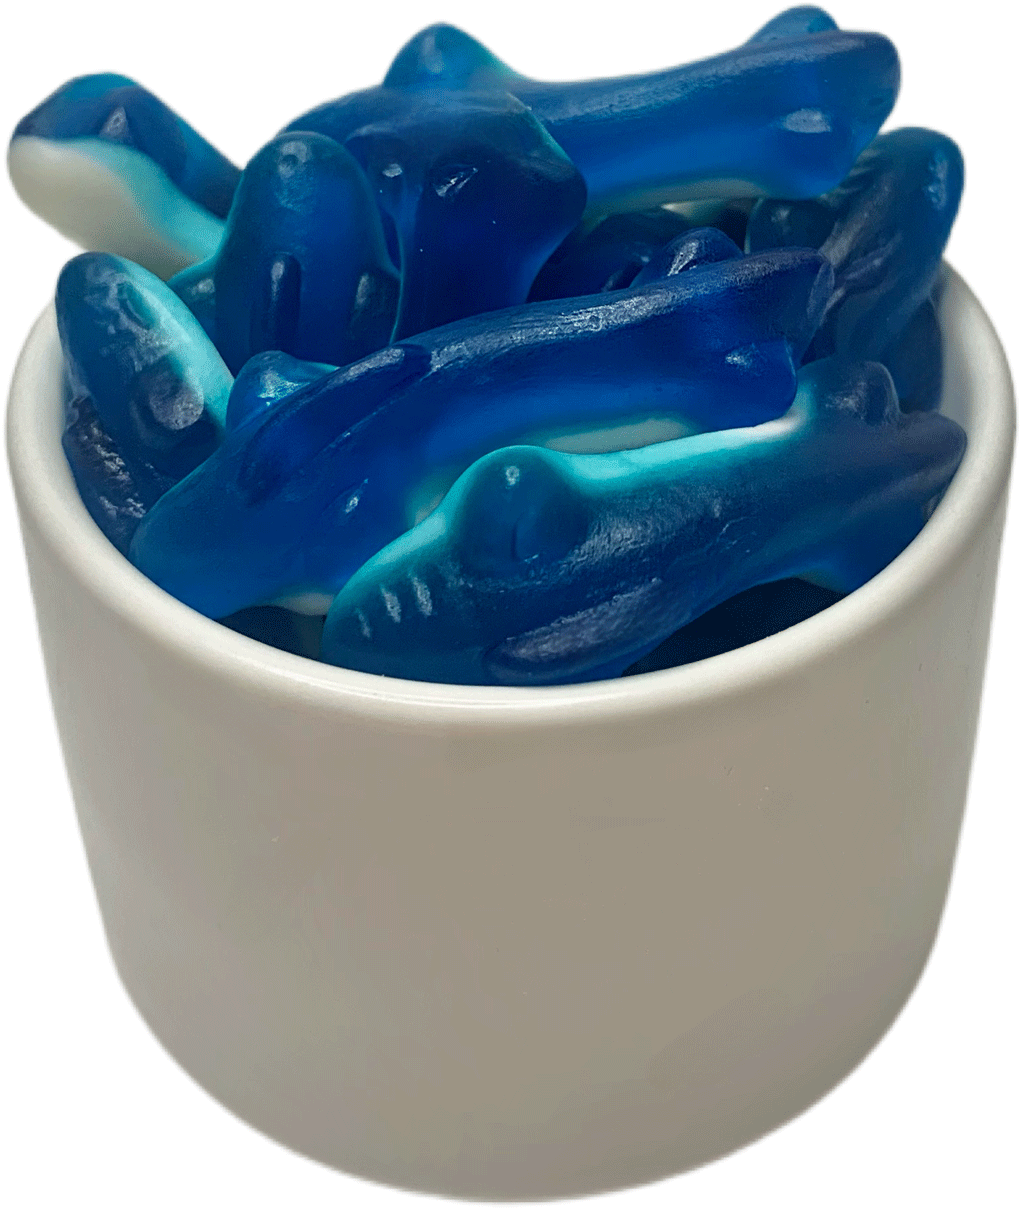 027 - Requins bleus